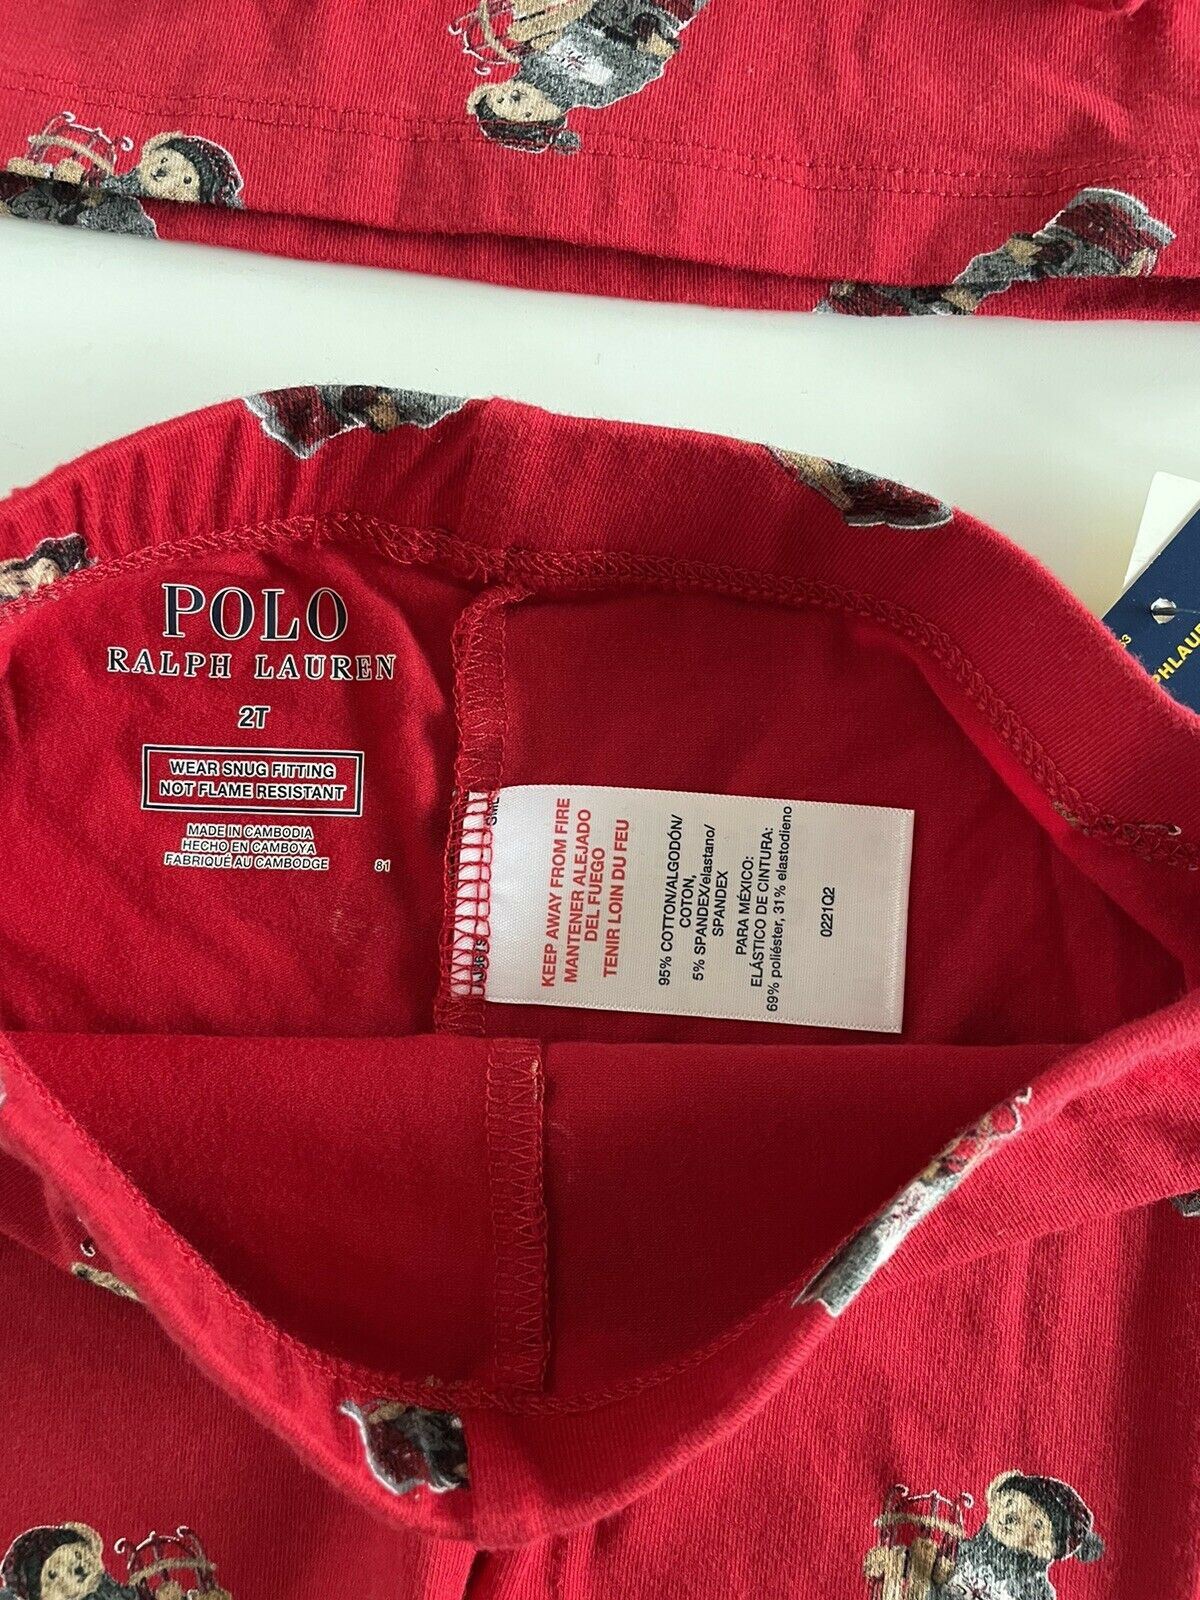 Neu mit Etikett: 50 $ Polo Ralph Lauren Bear Jungen-Pyjama-Set in Rot, 24 Monate